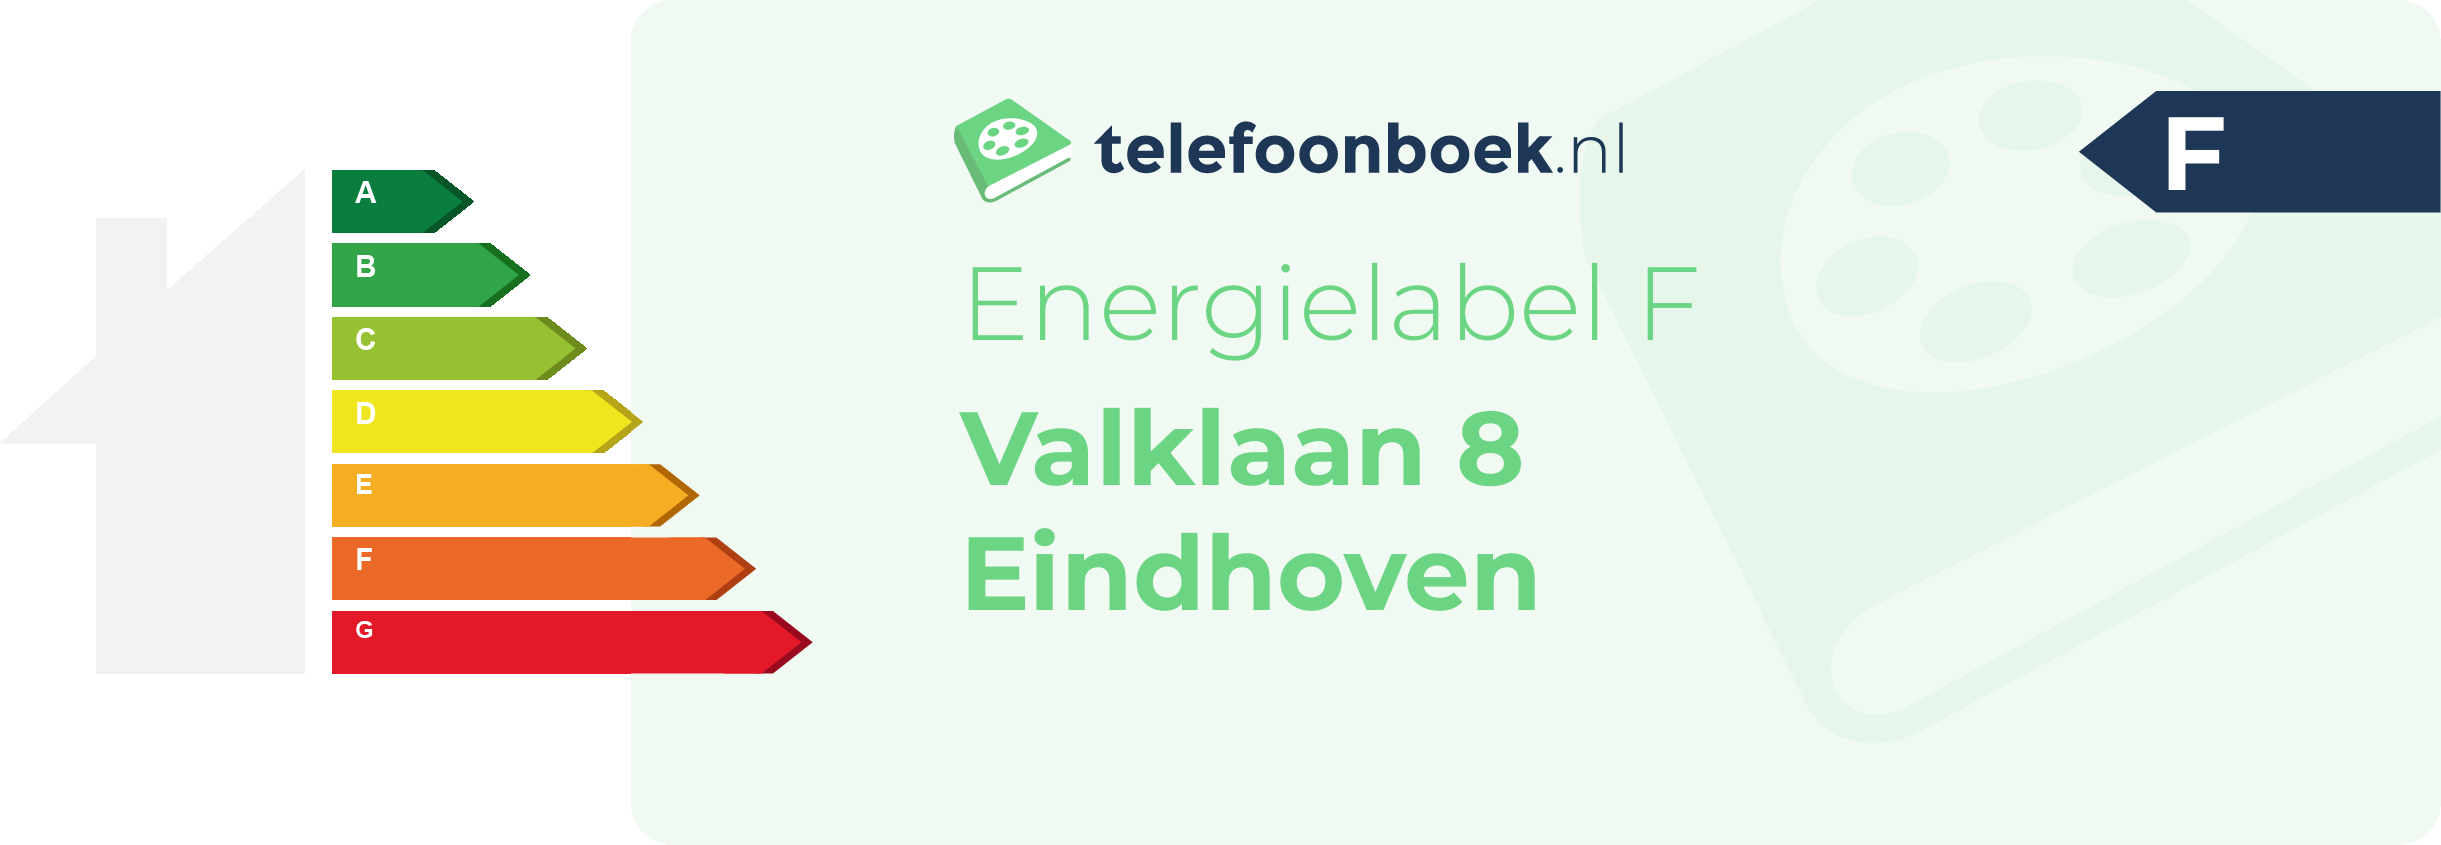 Energielabel Valklaan 8 Eindhoven